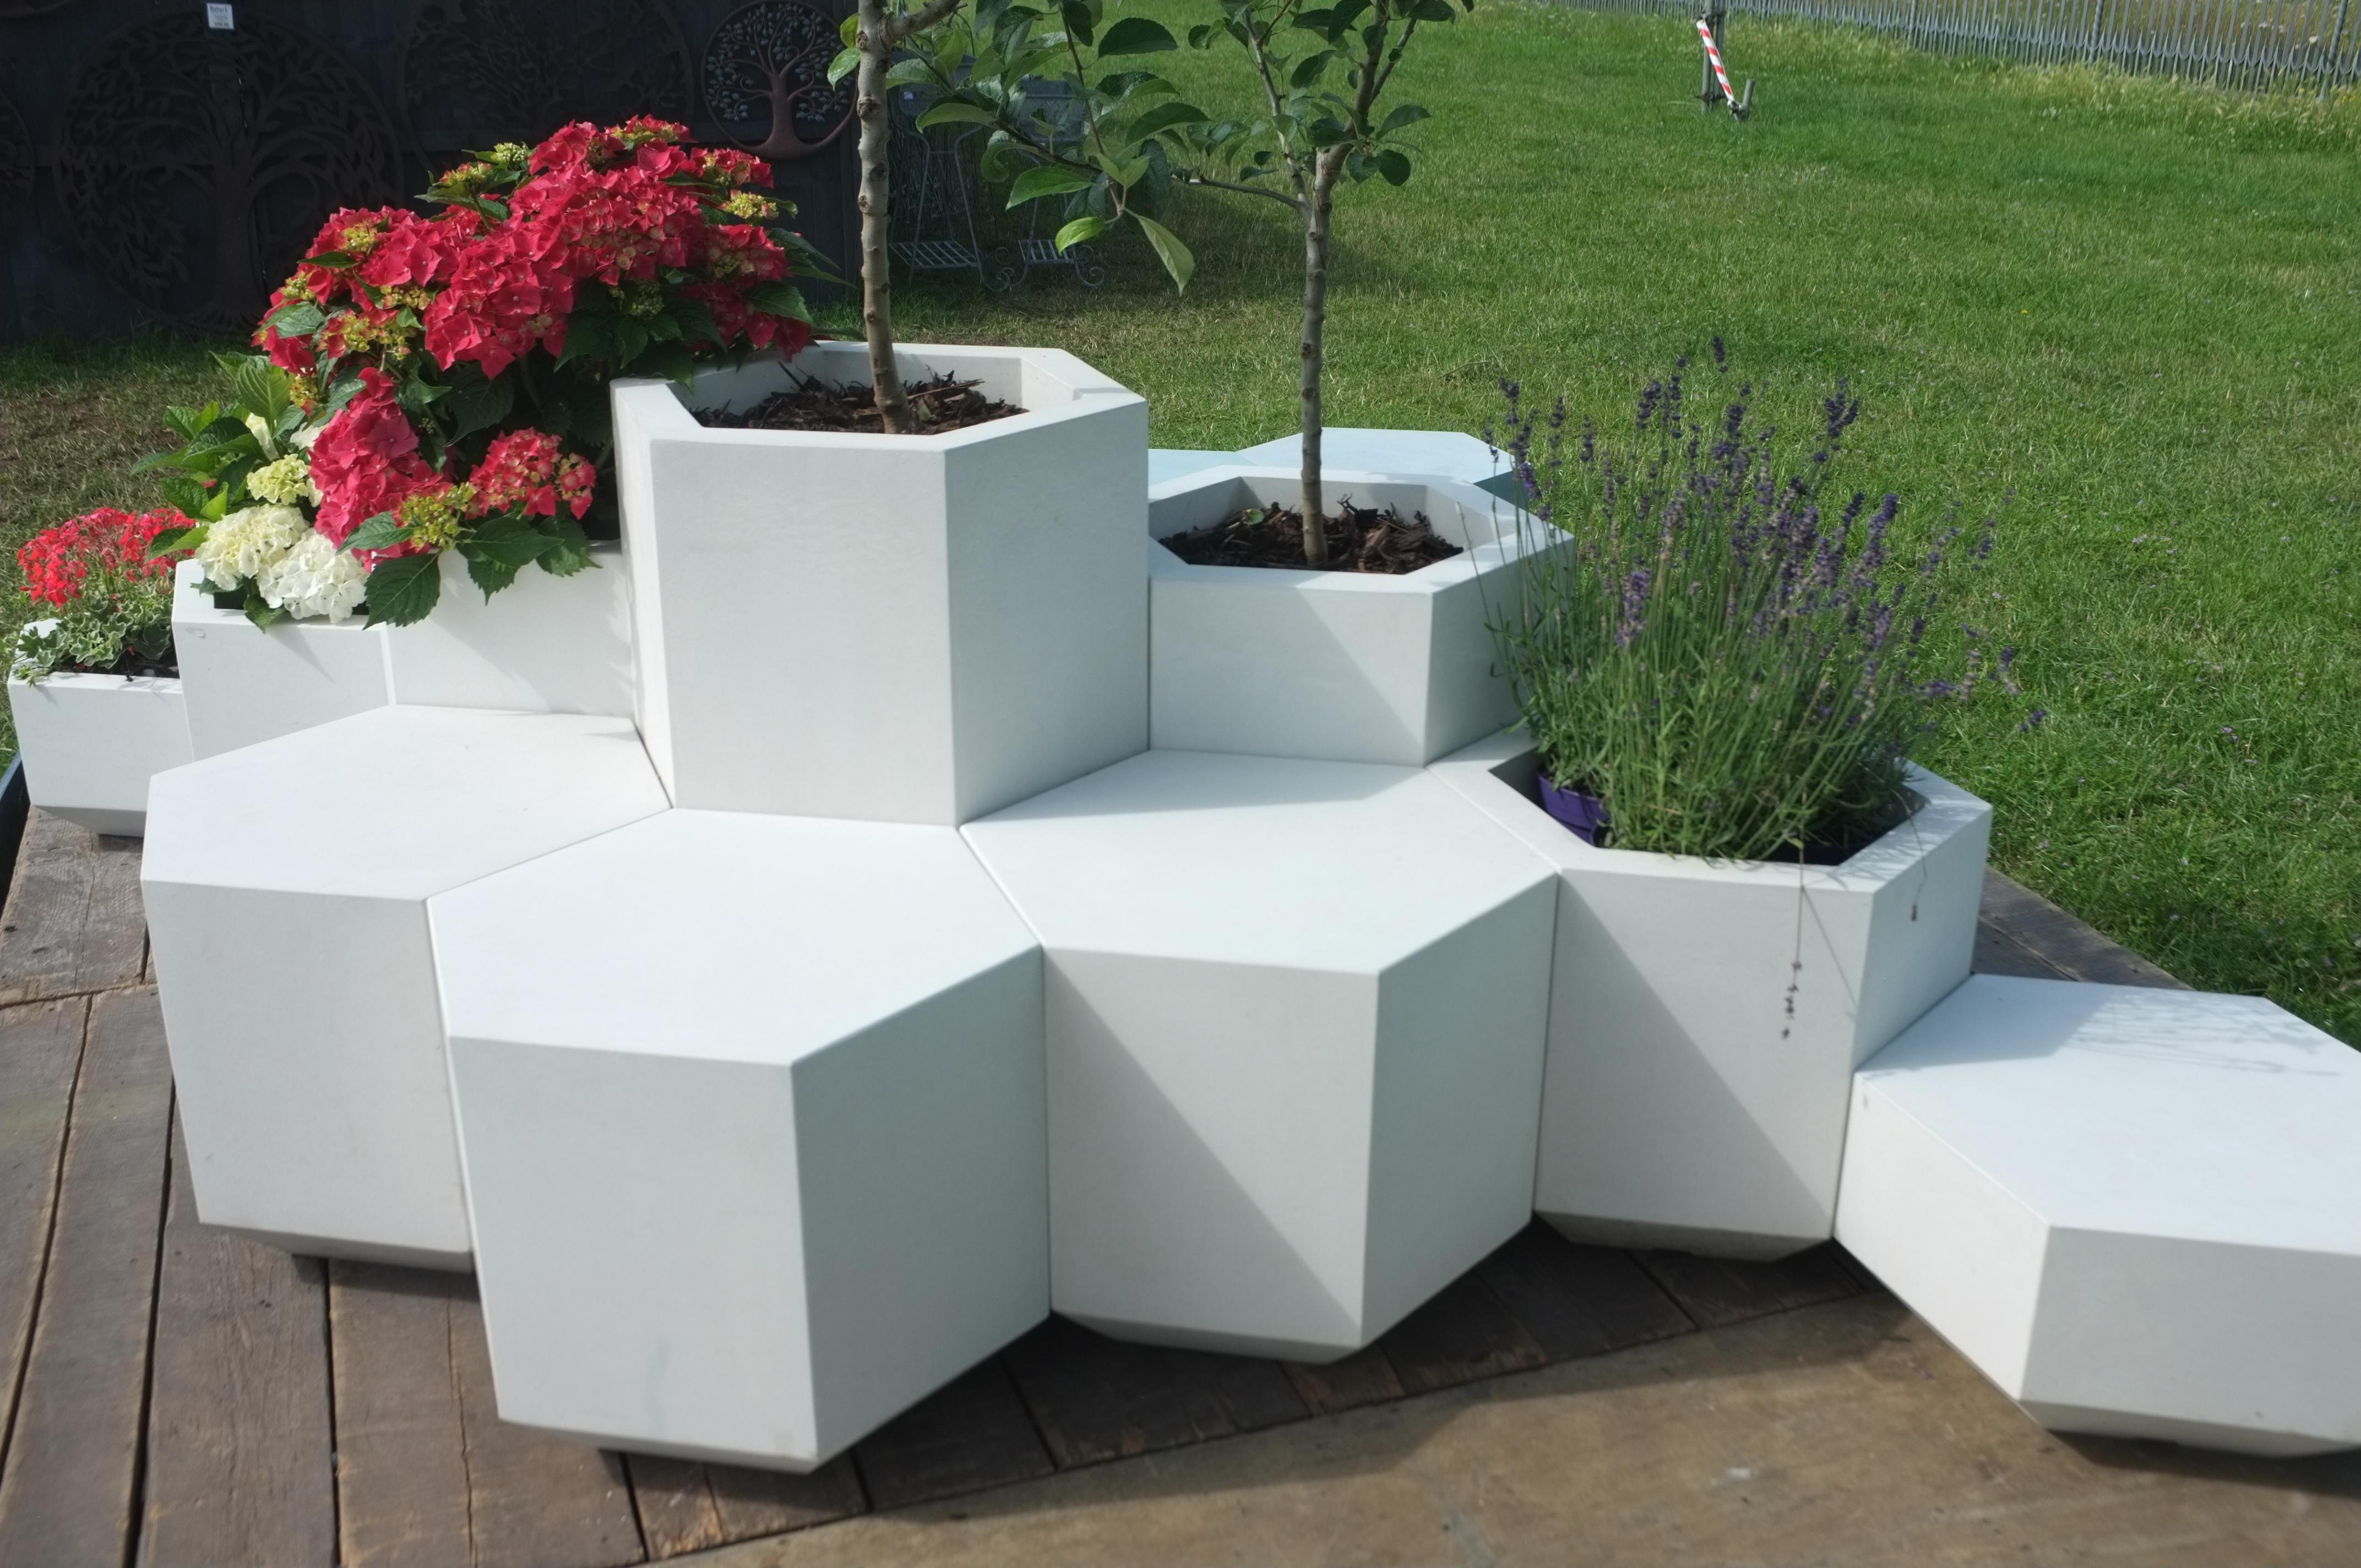 British Indoor and Outdoor Concrete Hex-Block Planter For Sale